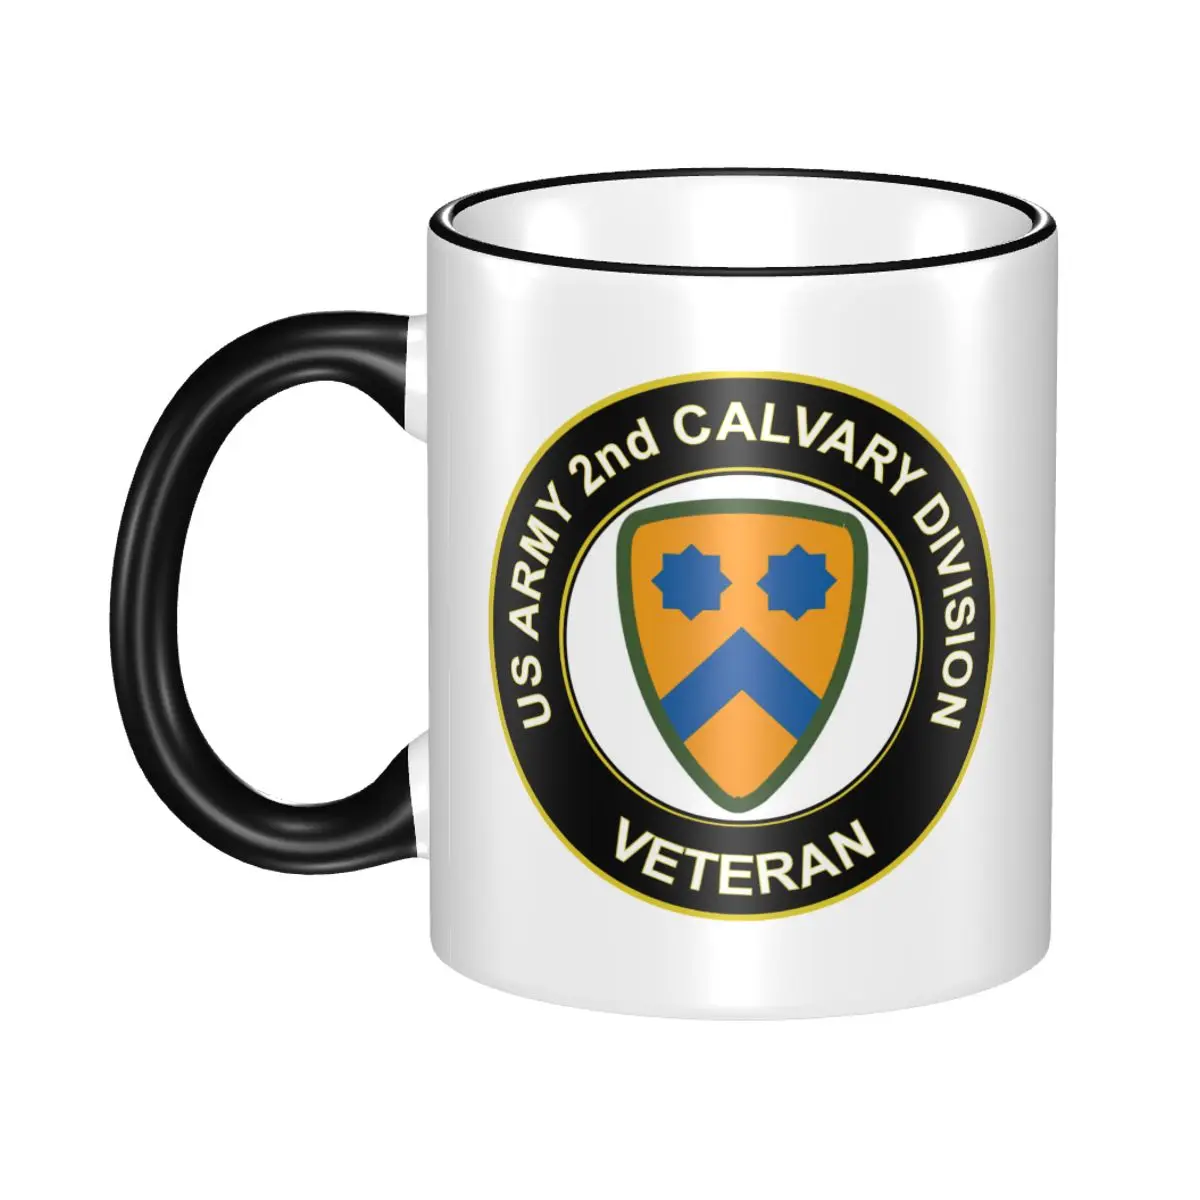 

Coffeeware Milk Mugen Drinkware U.S. Army Veteran 2nd Cavalry Division Best Gift for Your Friends